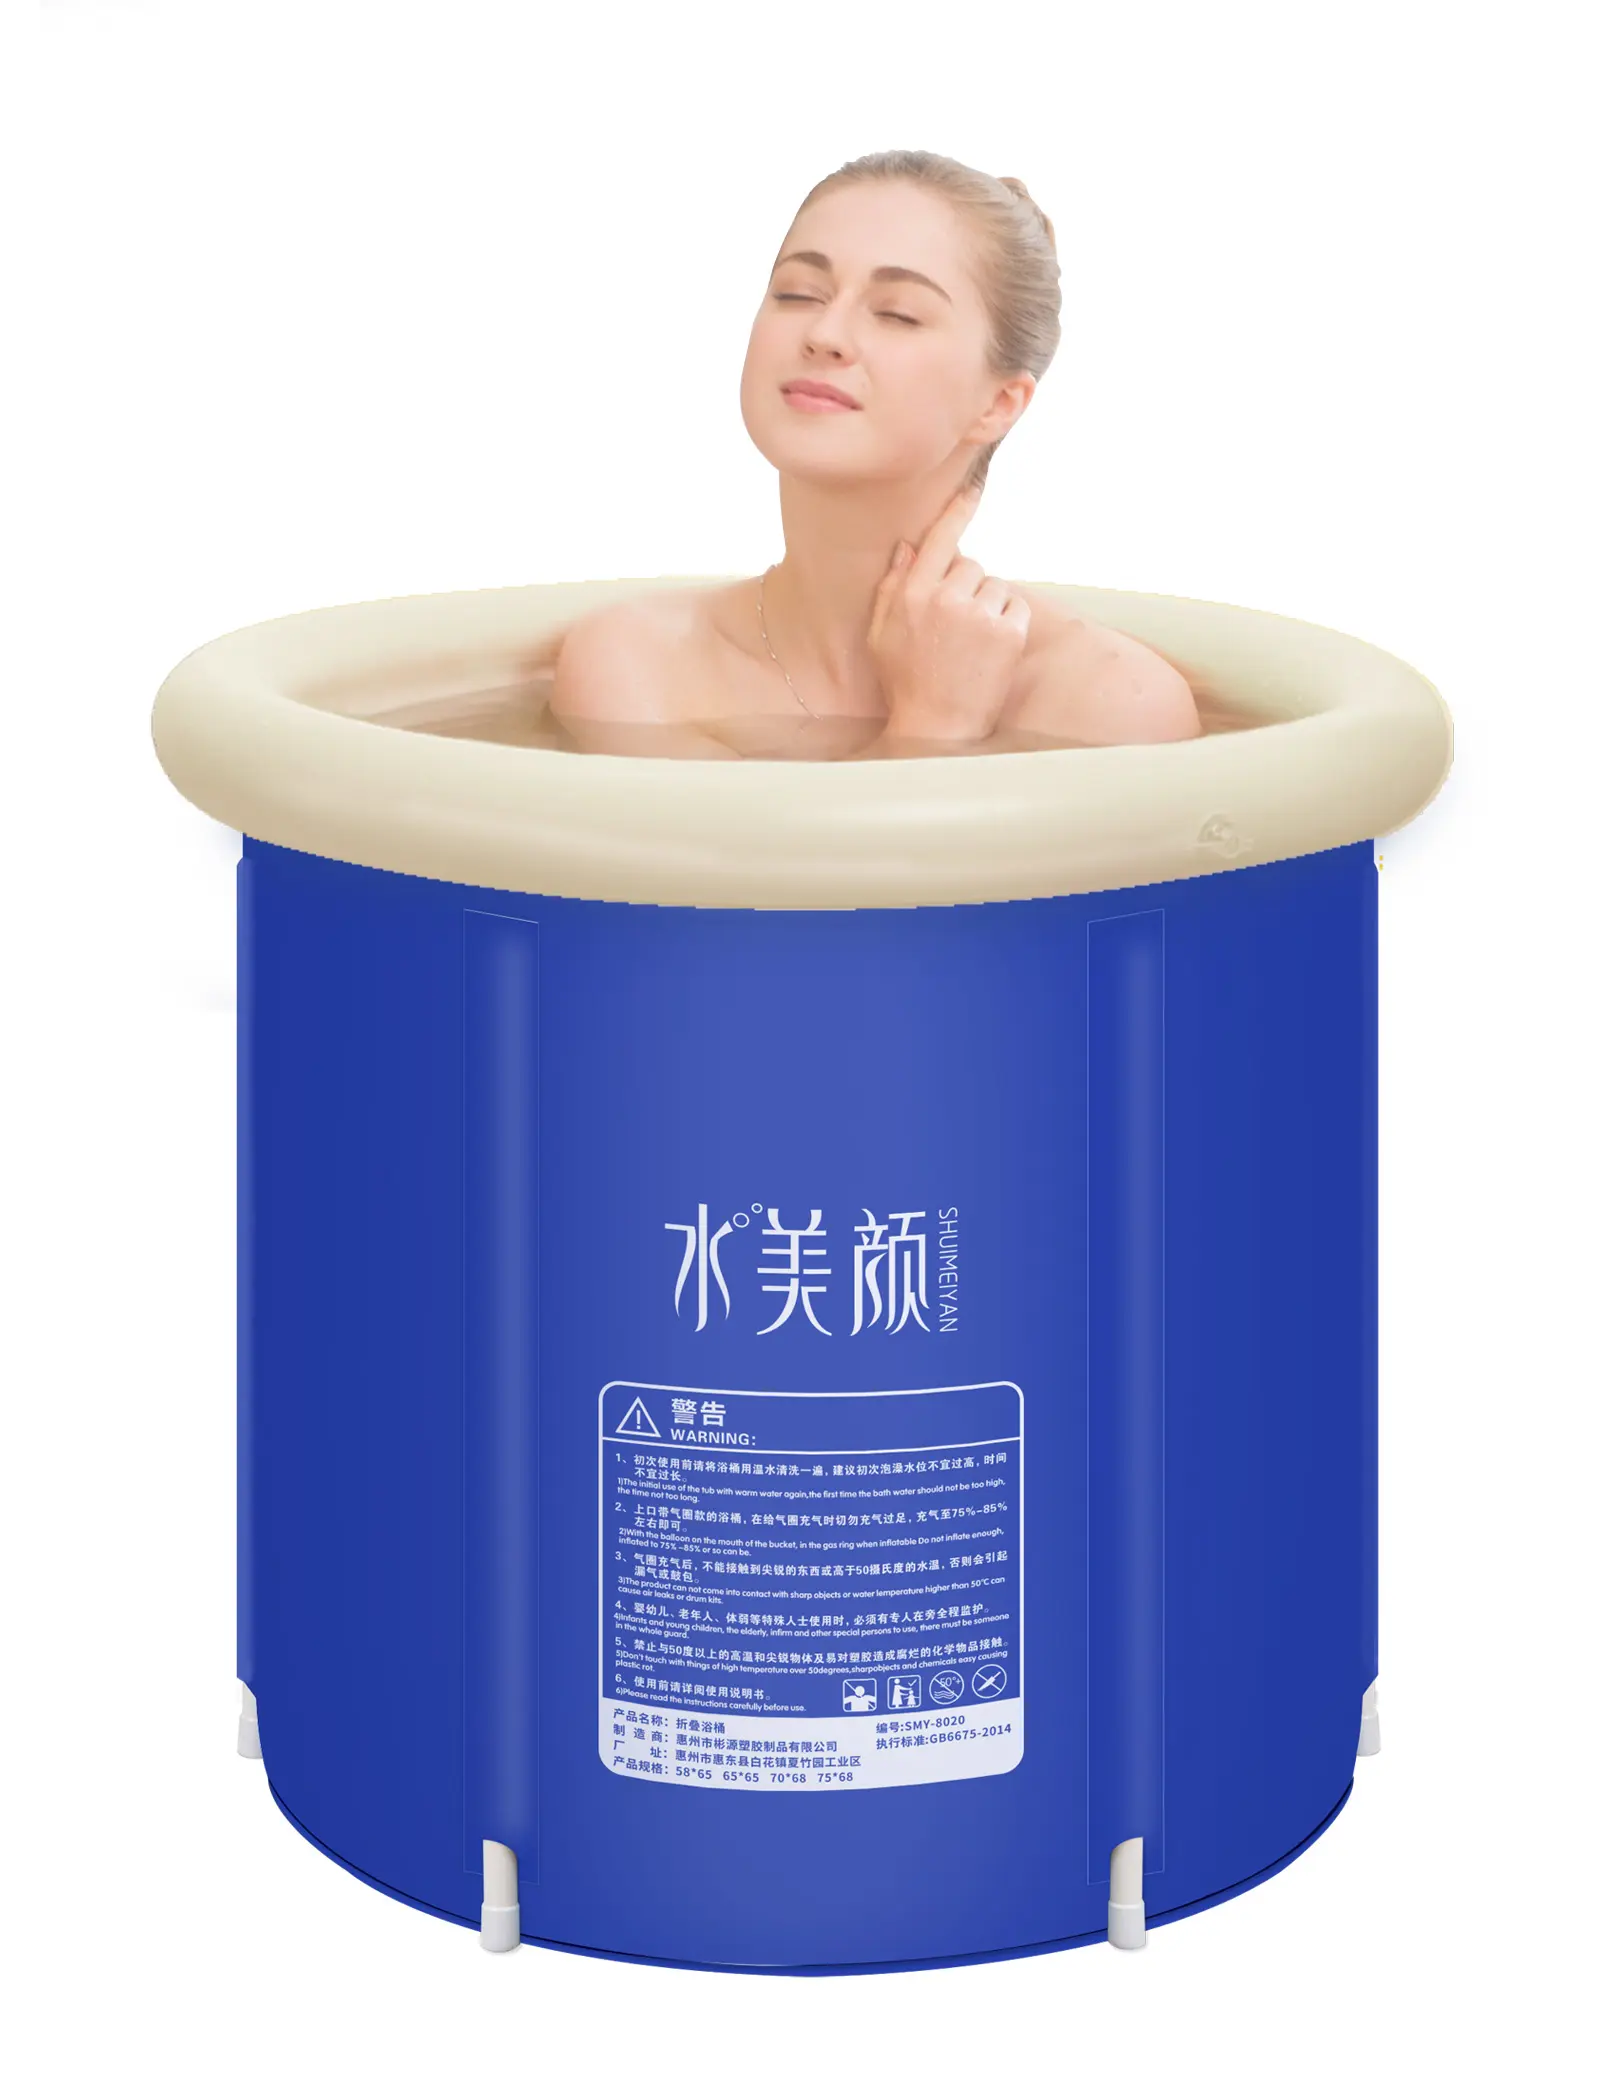 Household sit-bath bath tub folding steam Inflatable tub bathing pvc Inflatable tub portable bathtub for adults plastic